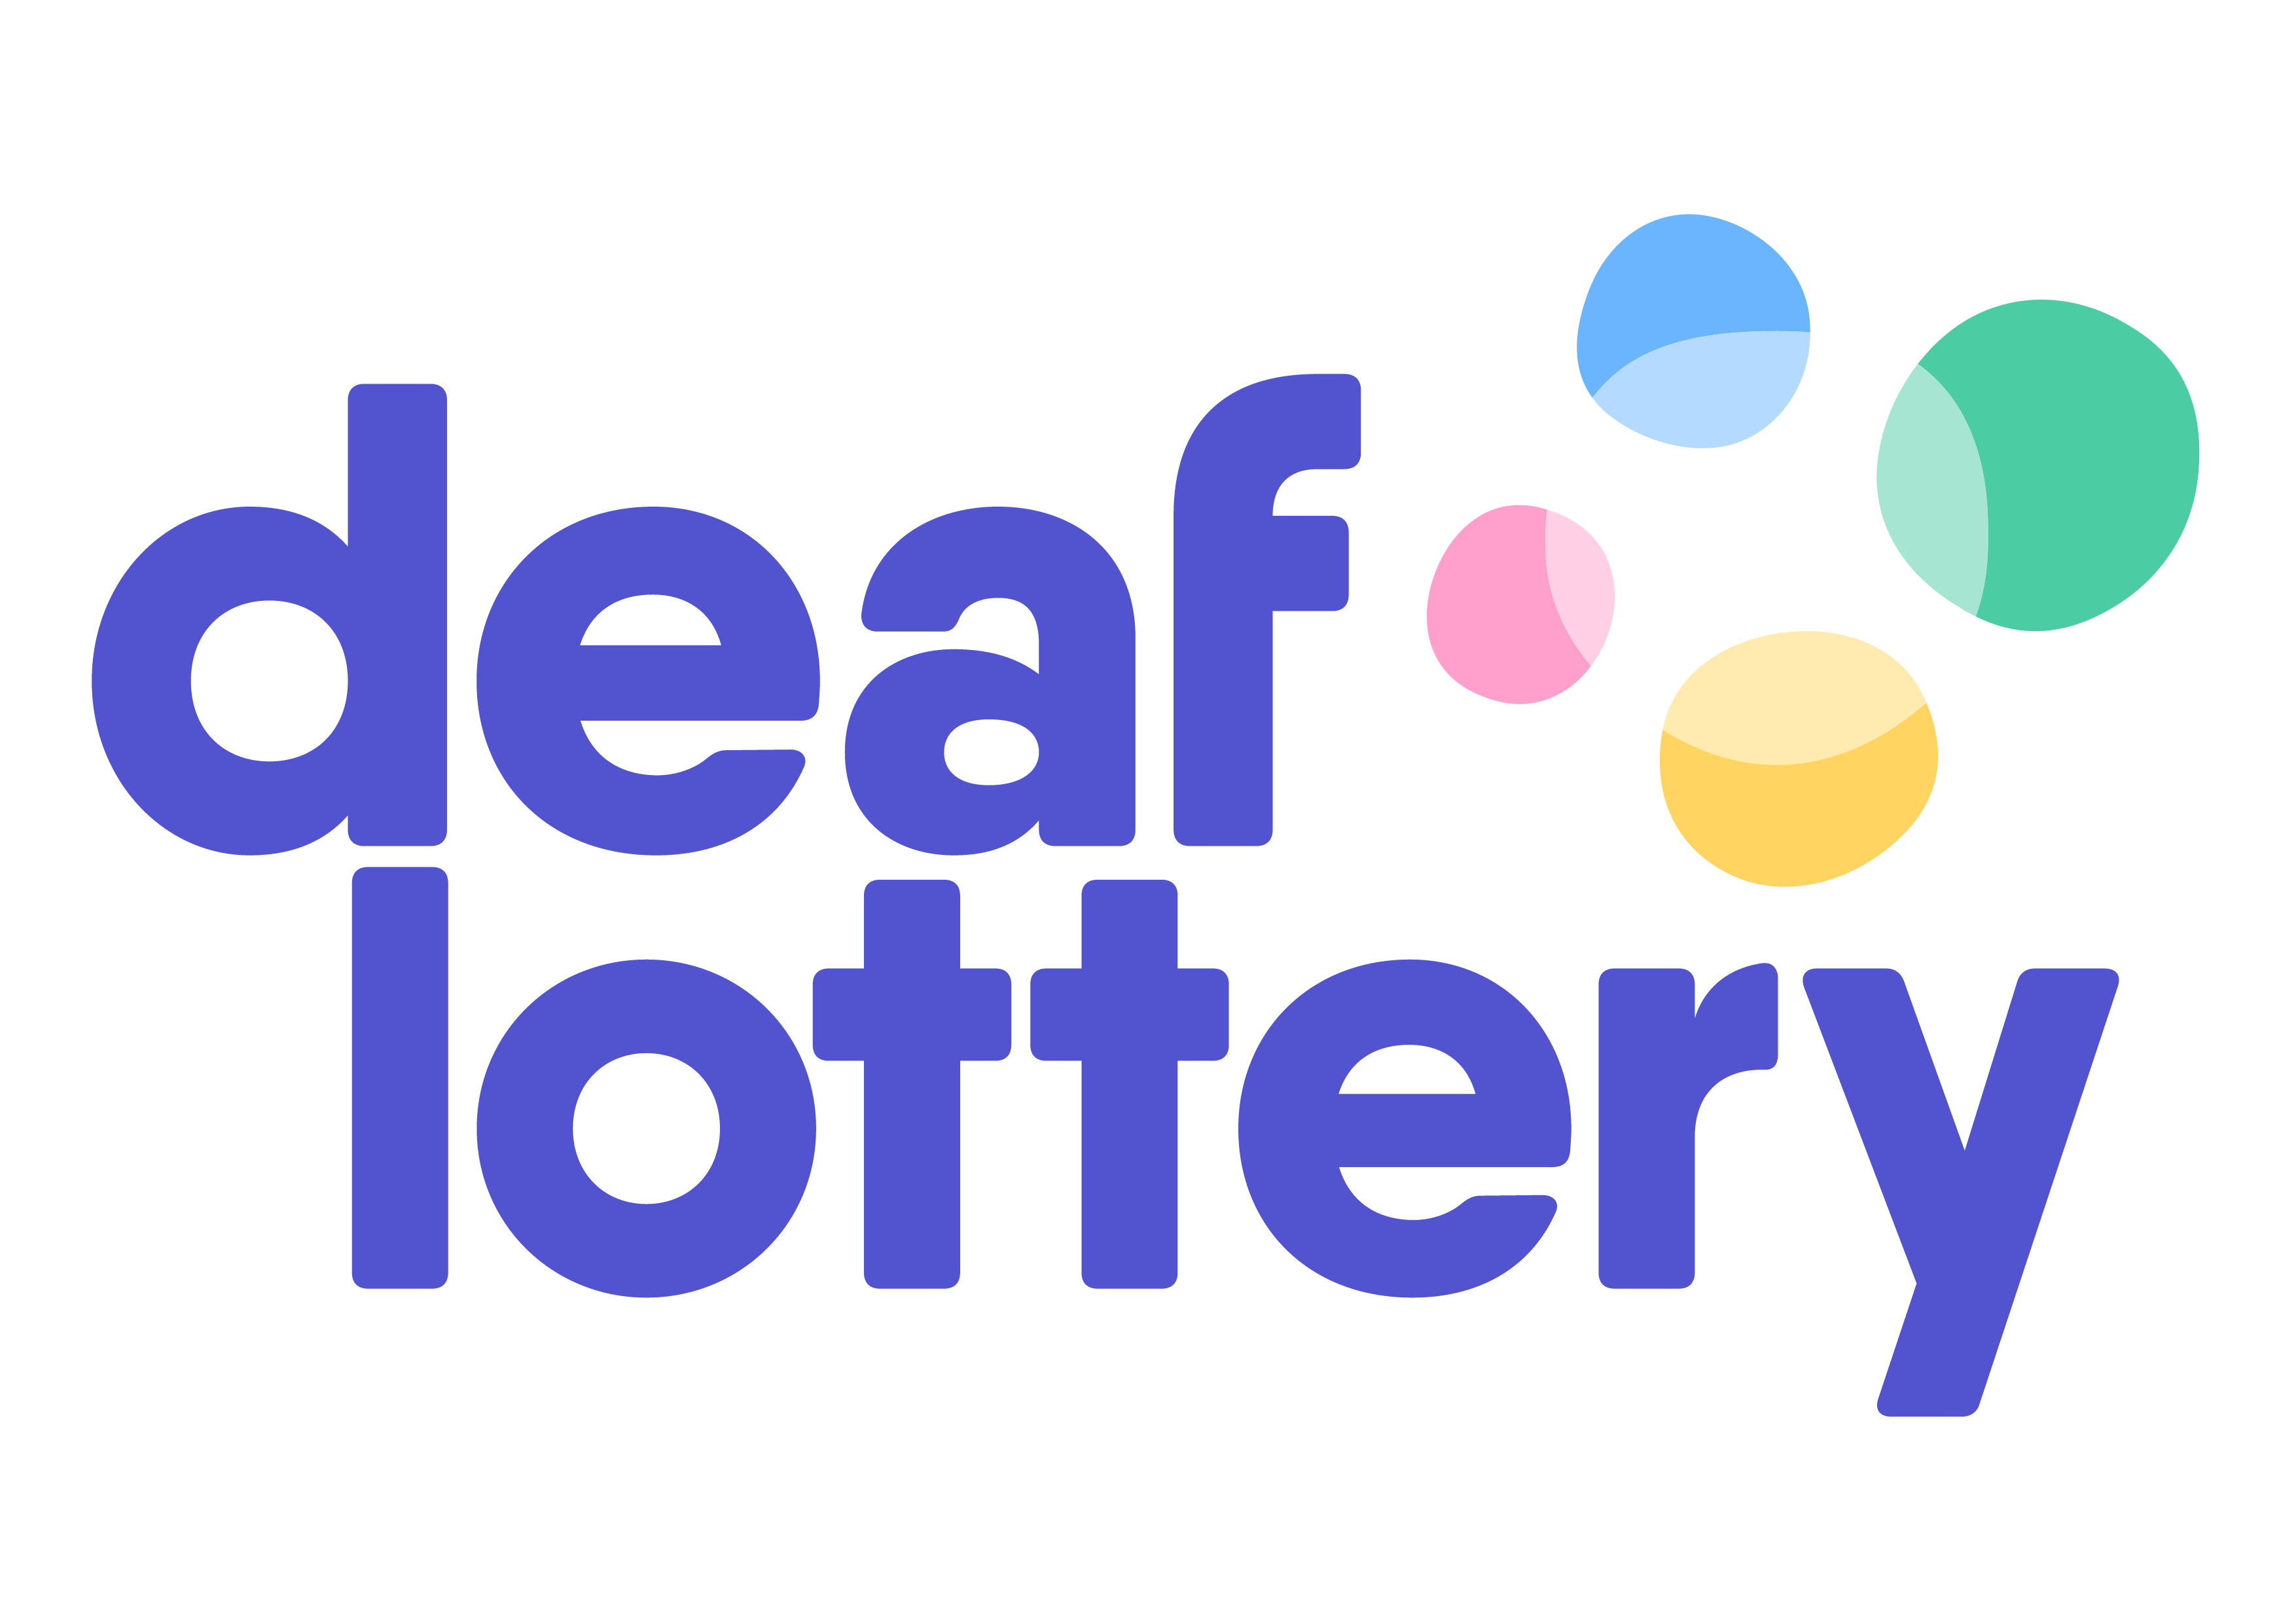 Deaf Lottery